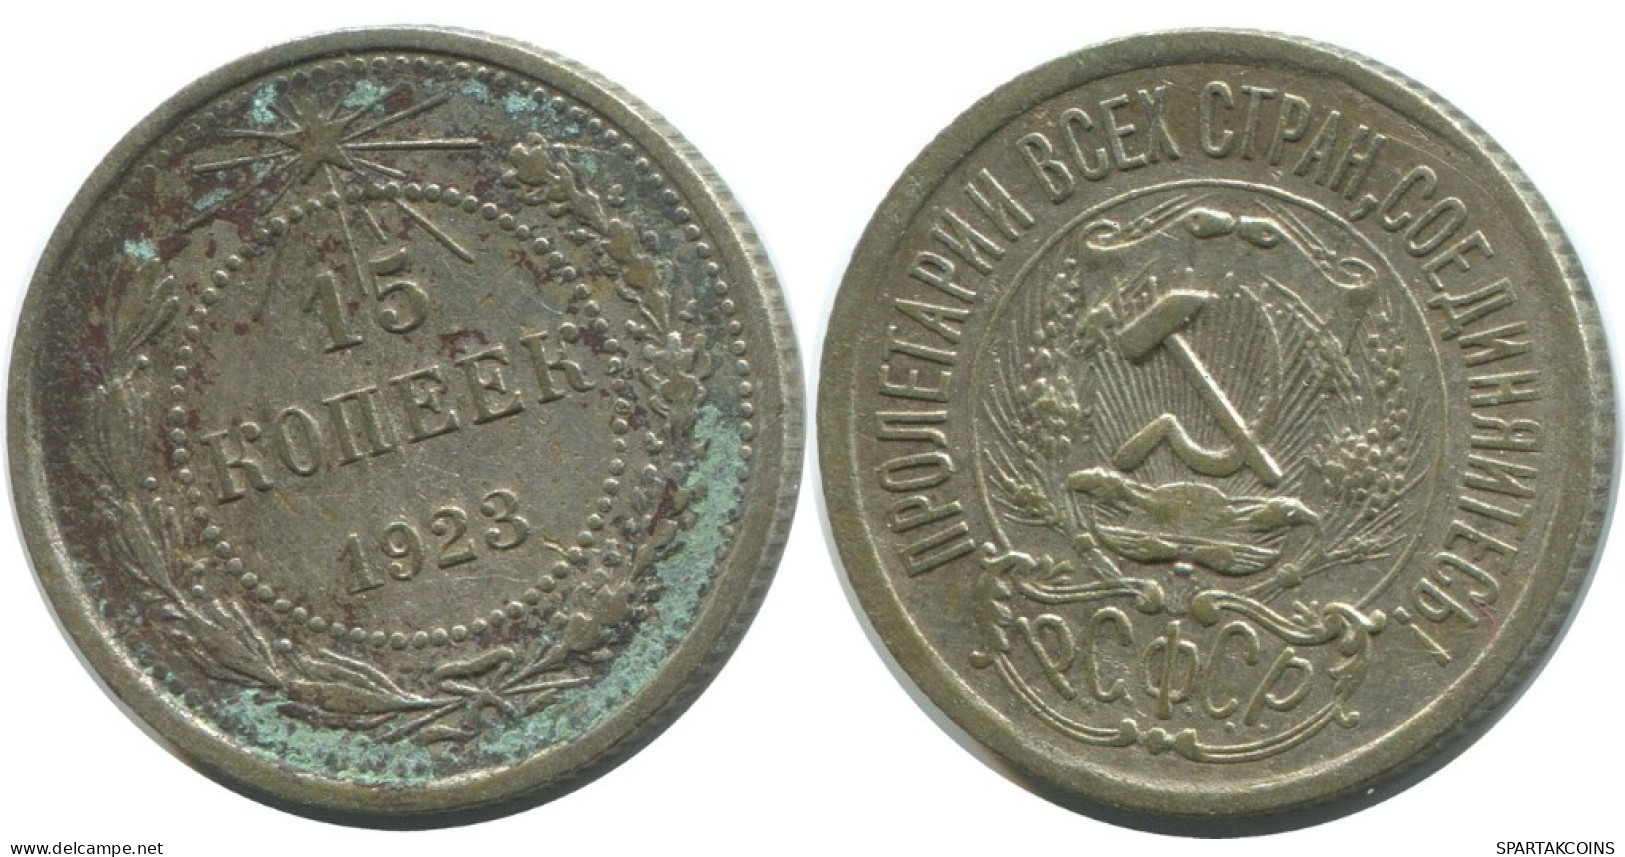 15 KOPEKS 1923 RUSSIA RSFSR SILVER Coin HIGH GRADE #AF166.4.U.A - Russia